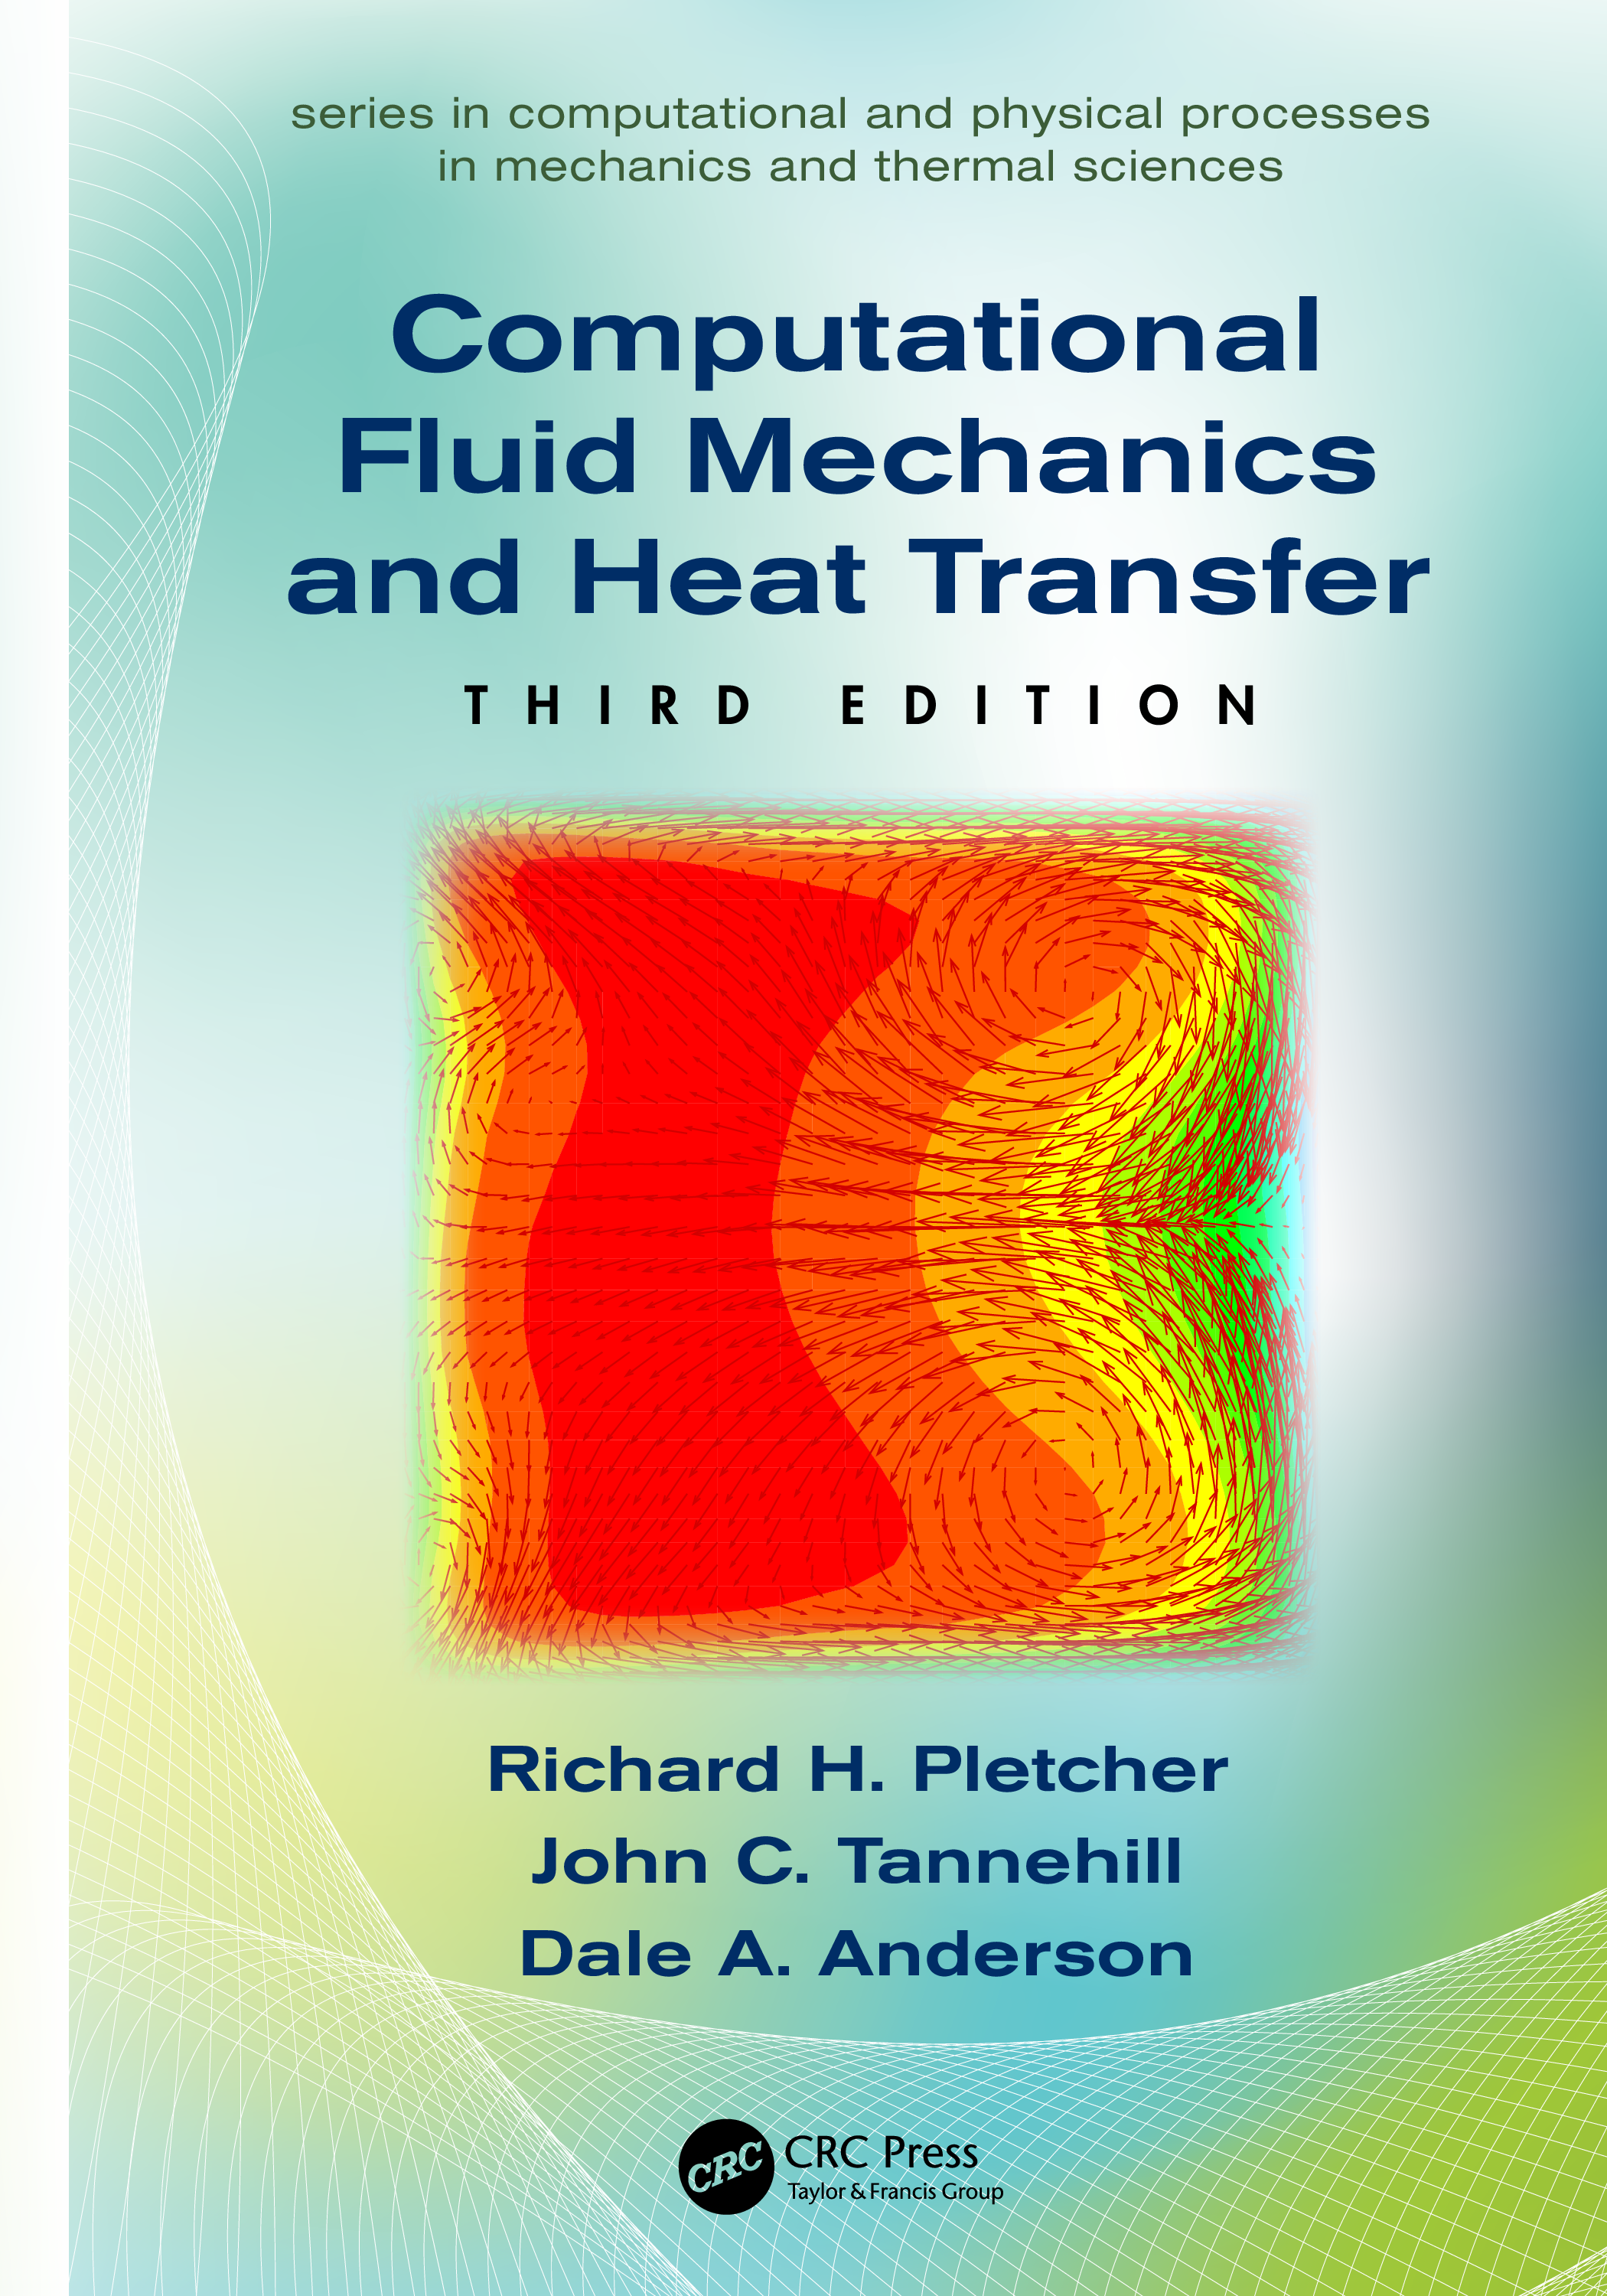 Computational fluid mechanics and heat transfer